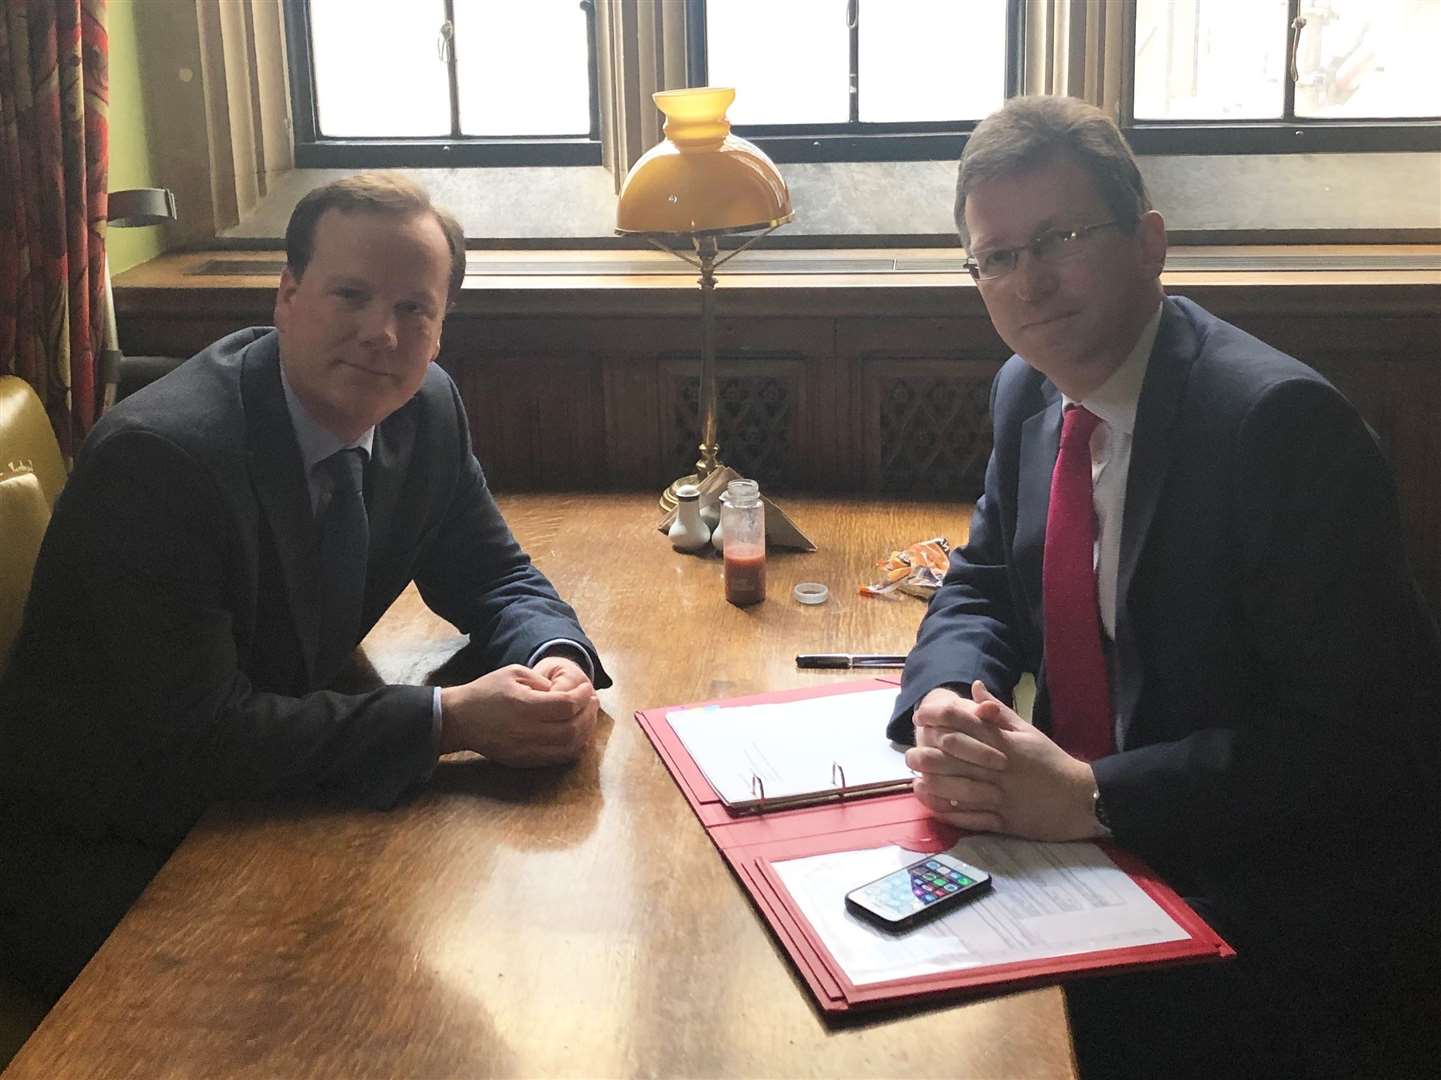 MP Charlie Elphicke with culture secretary Jeremy Wright